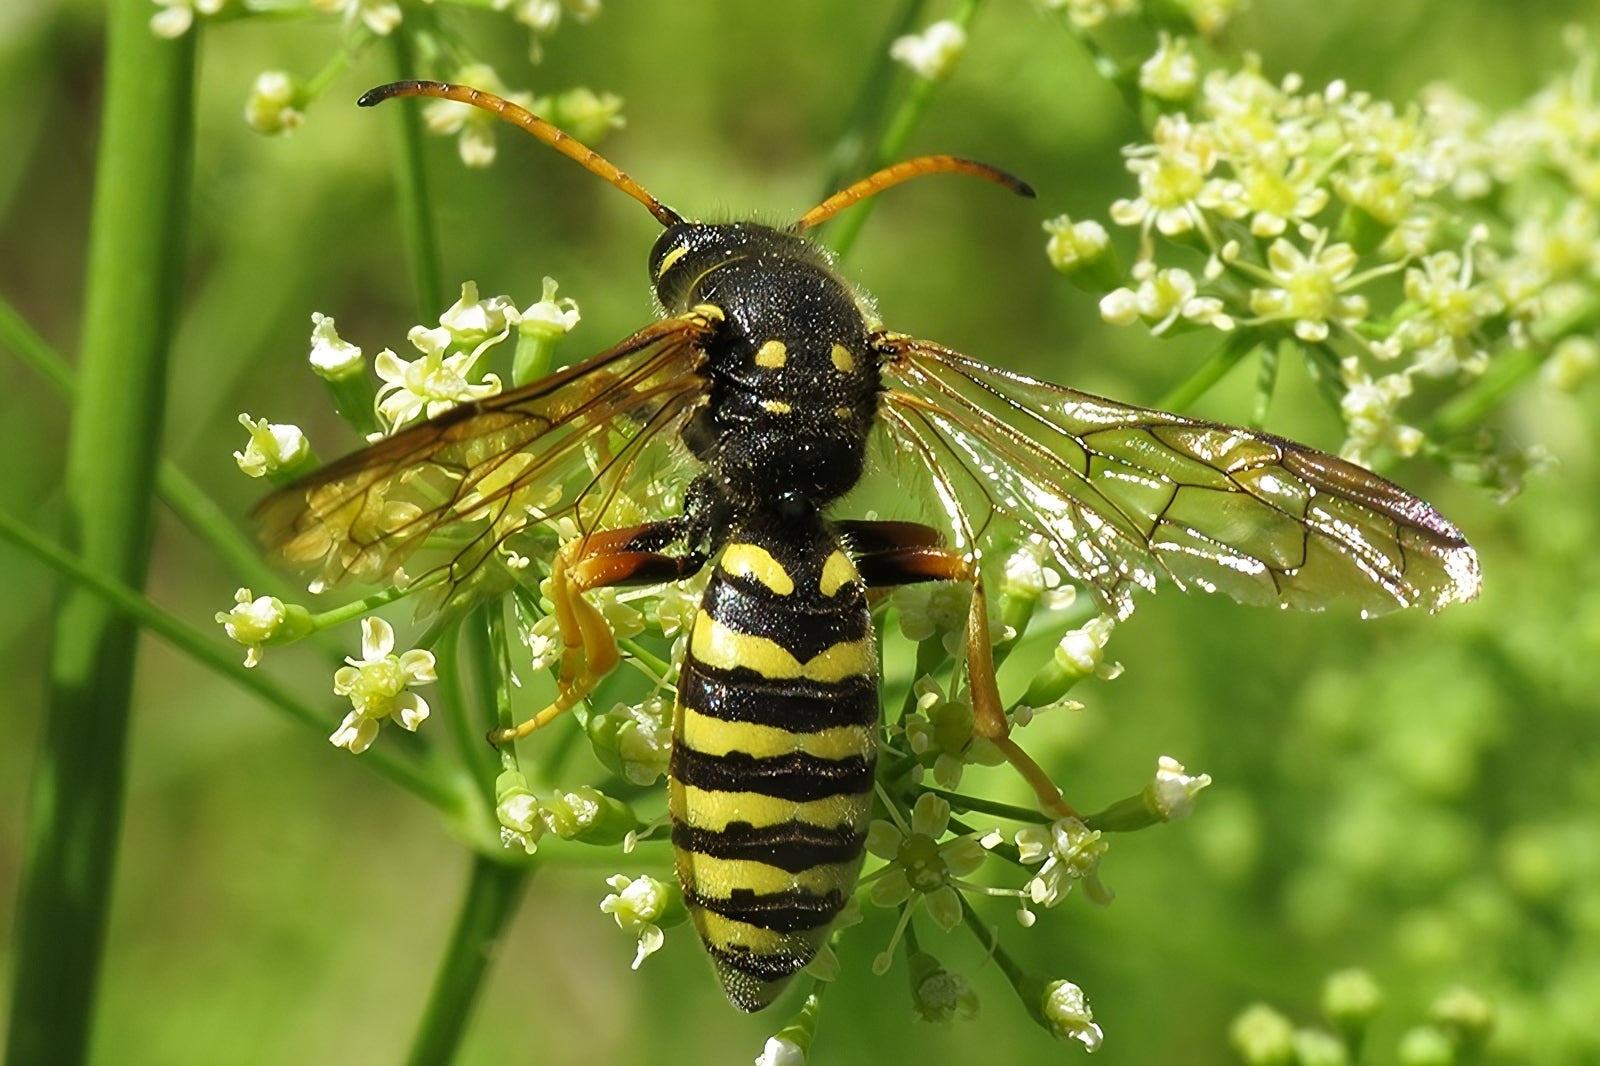 Sapygid Wasp, Image by Simon Oliver